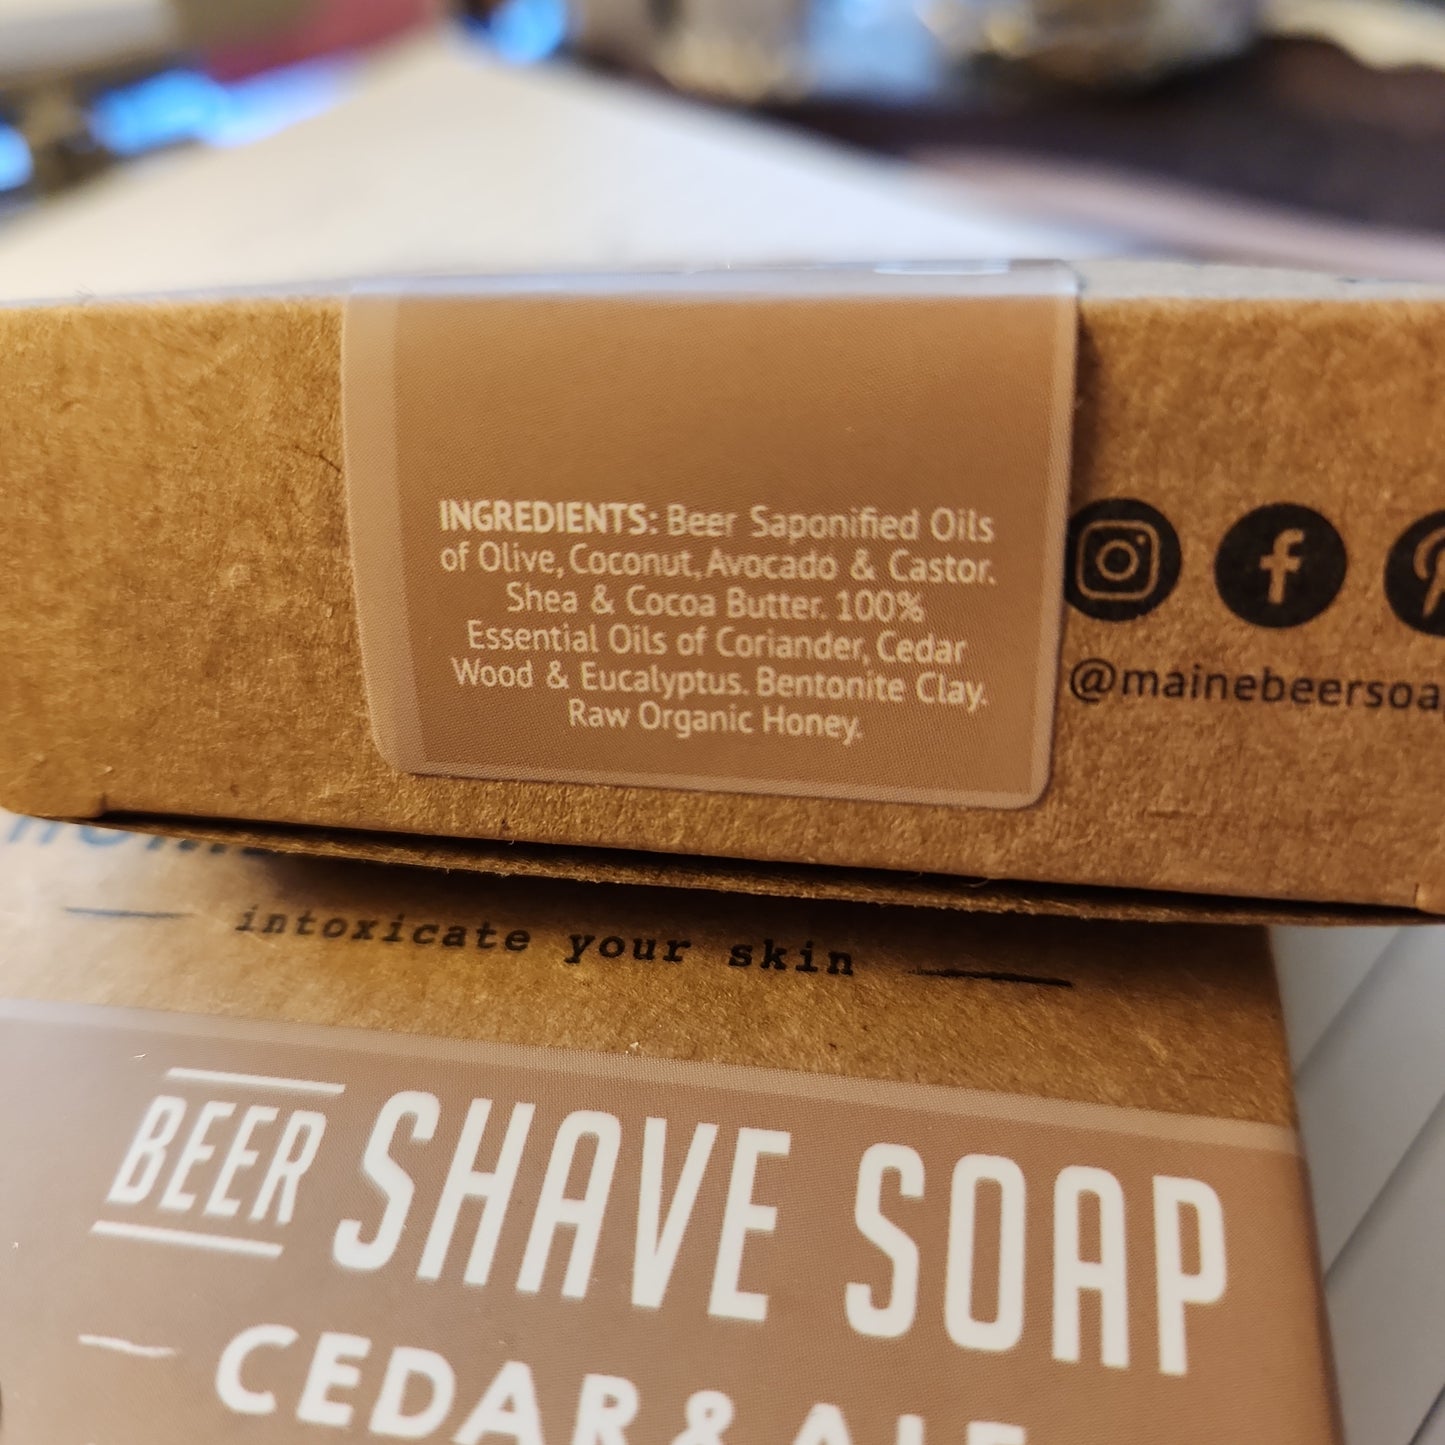 Cedar & Ale Beer Shaving Soap - Wiggle & Ding